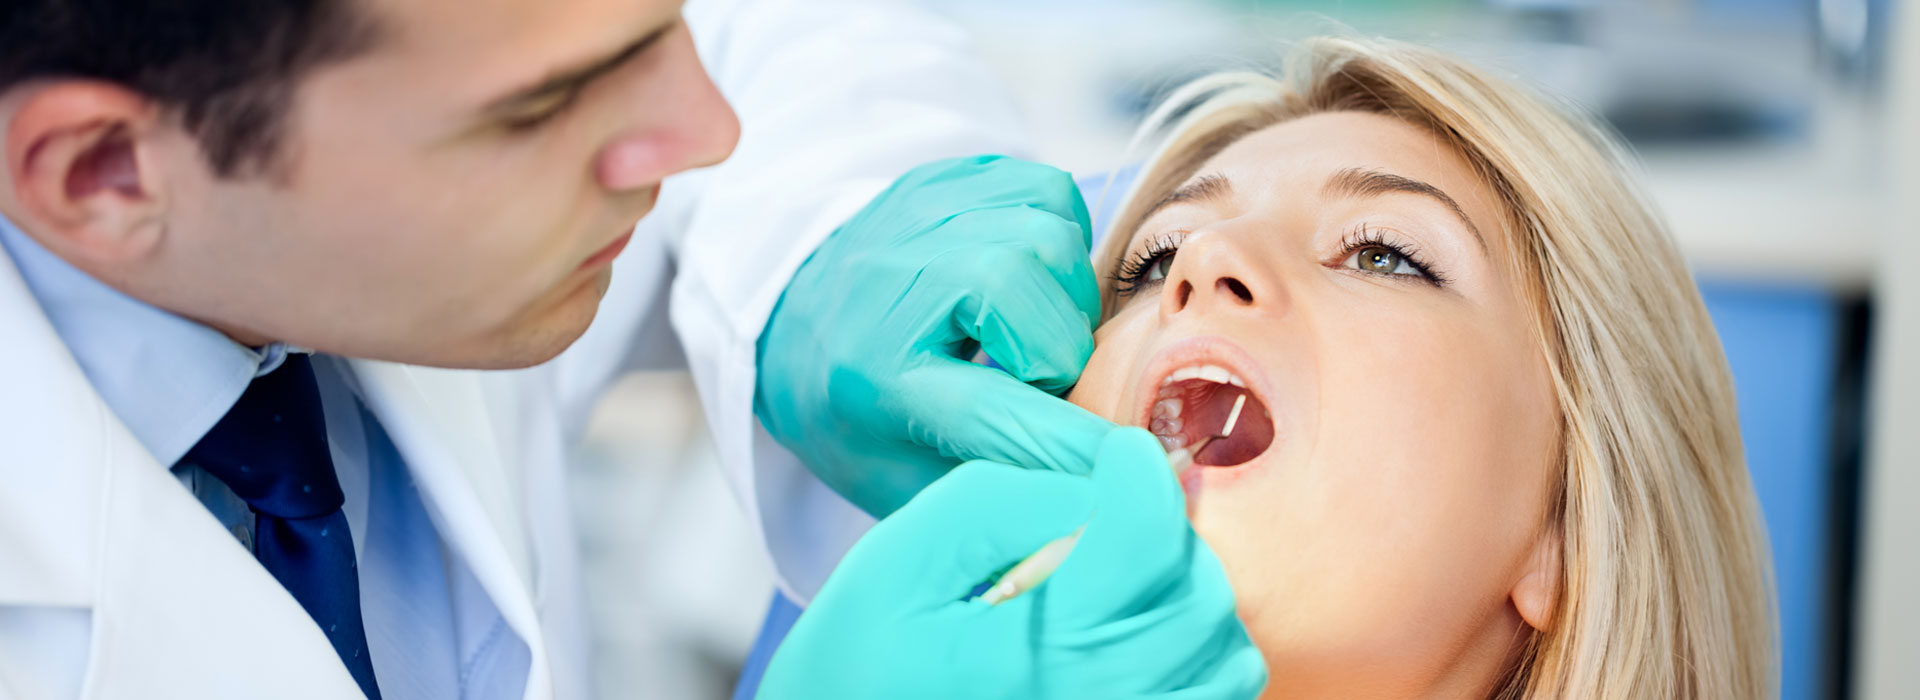 Dentist examining female patient's teeth